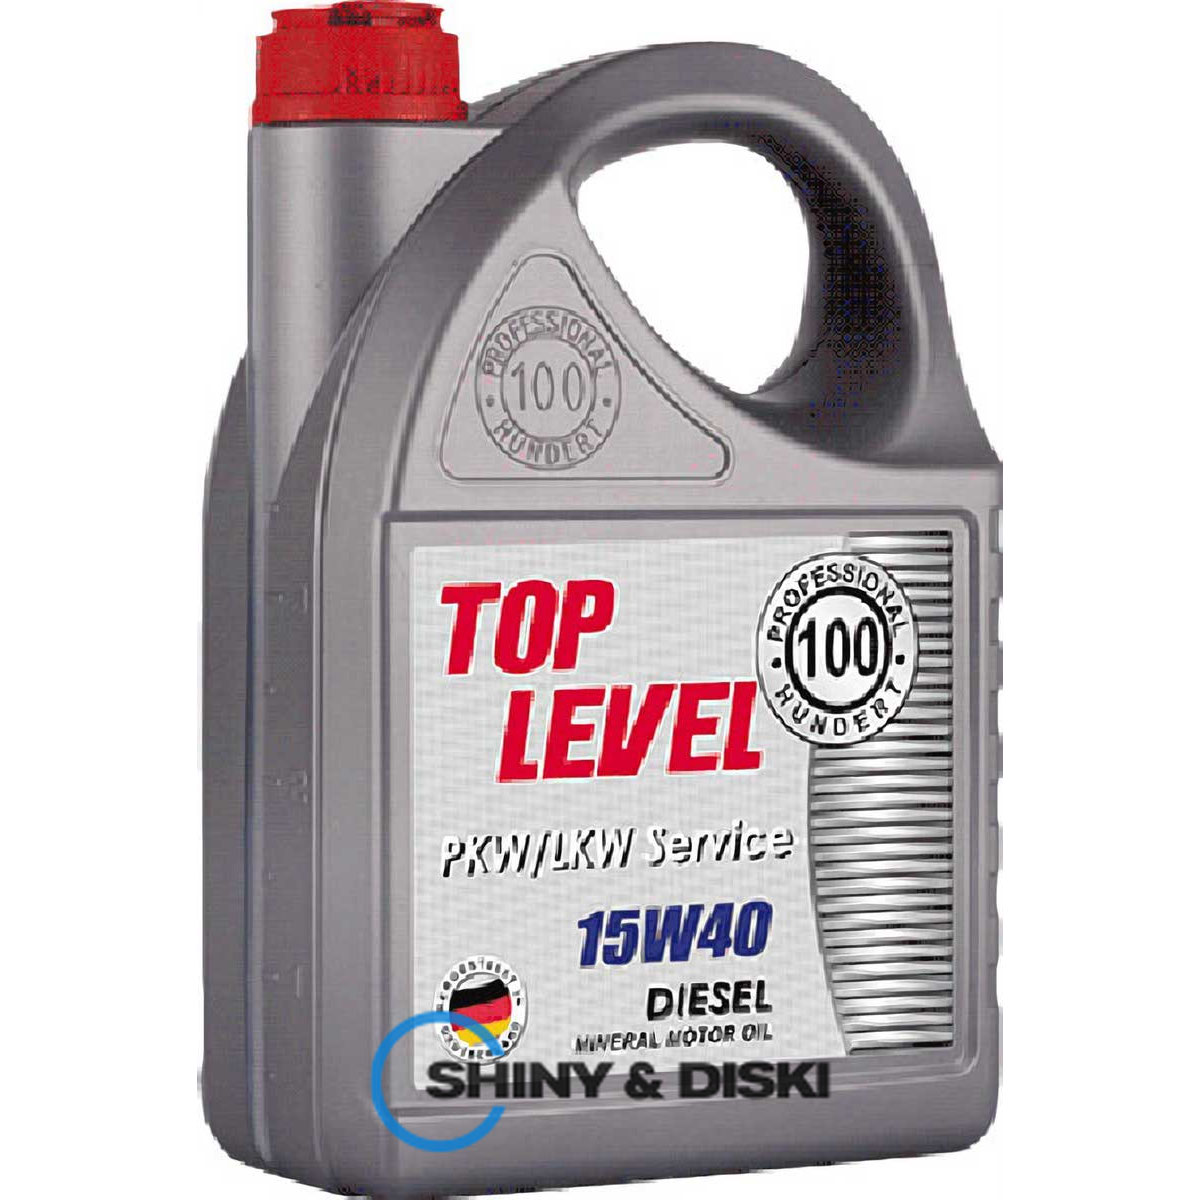 professional hundert top level diesel